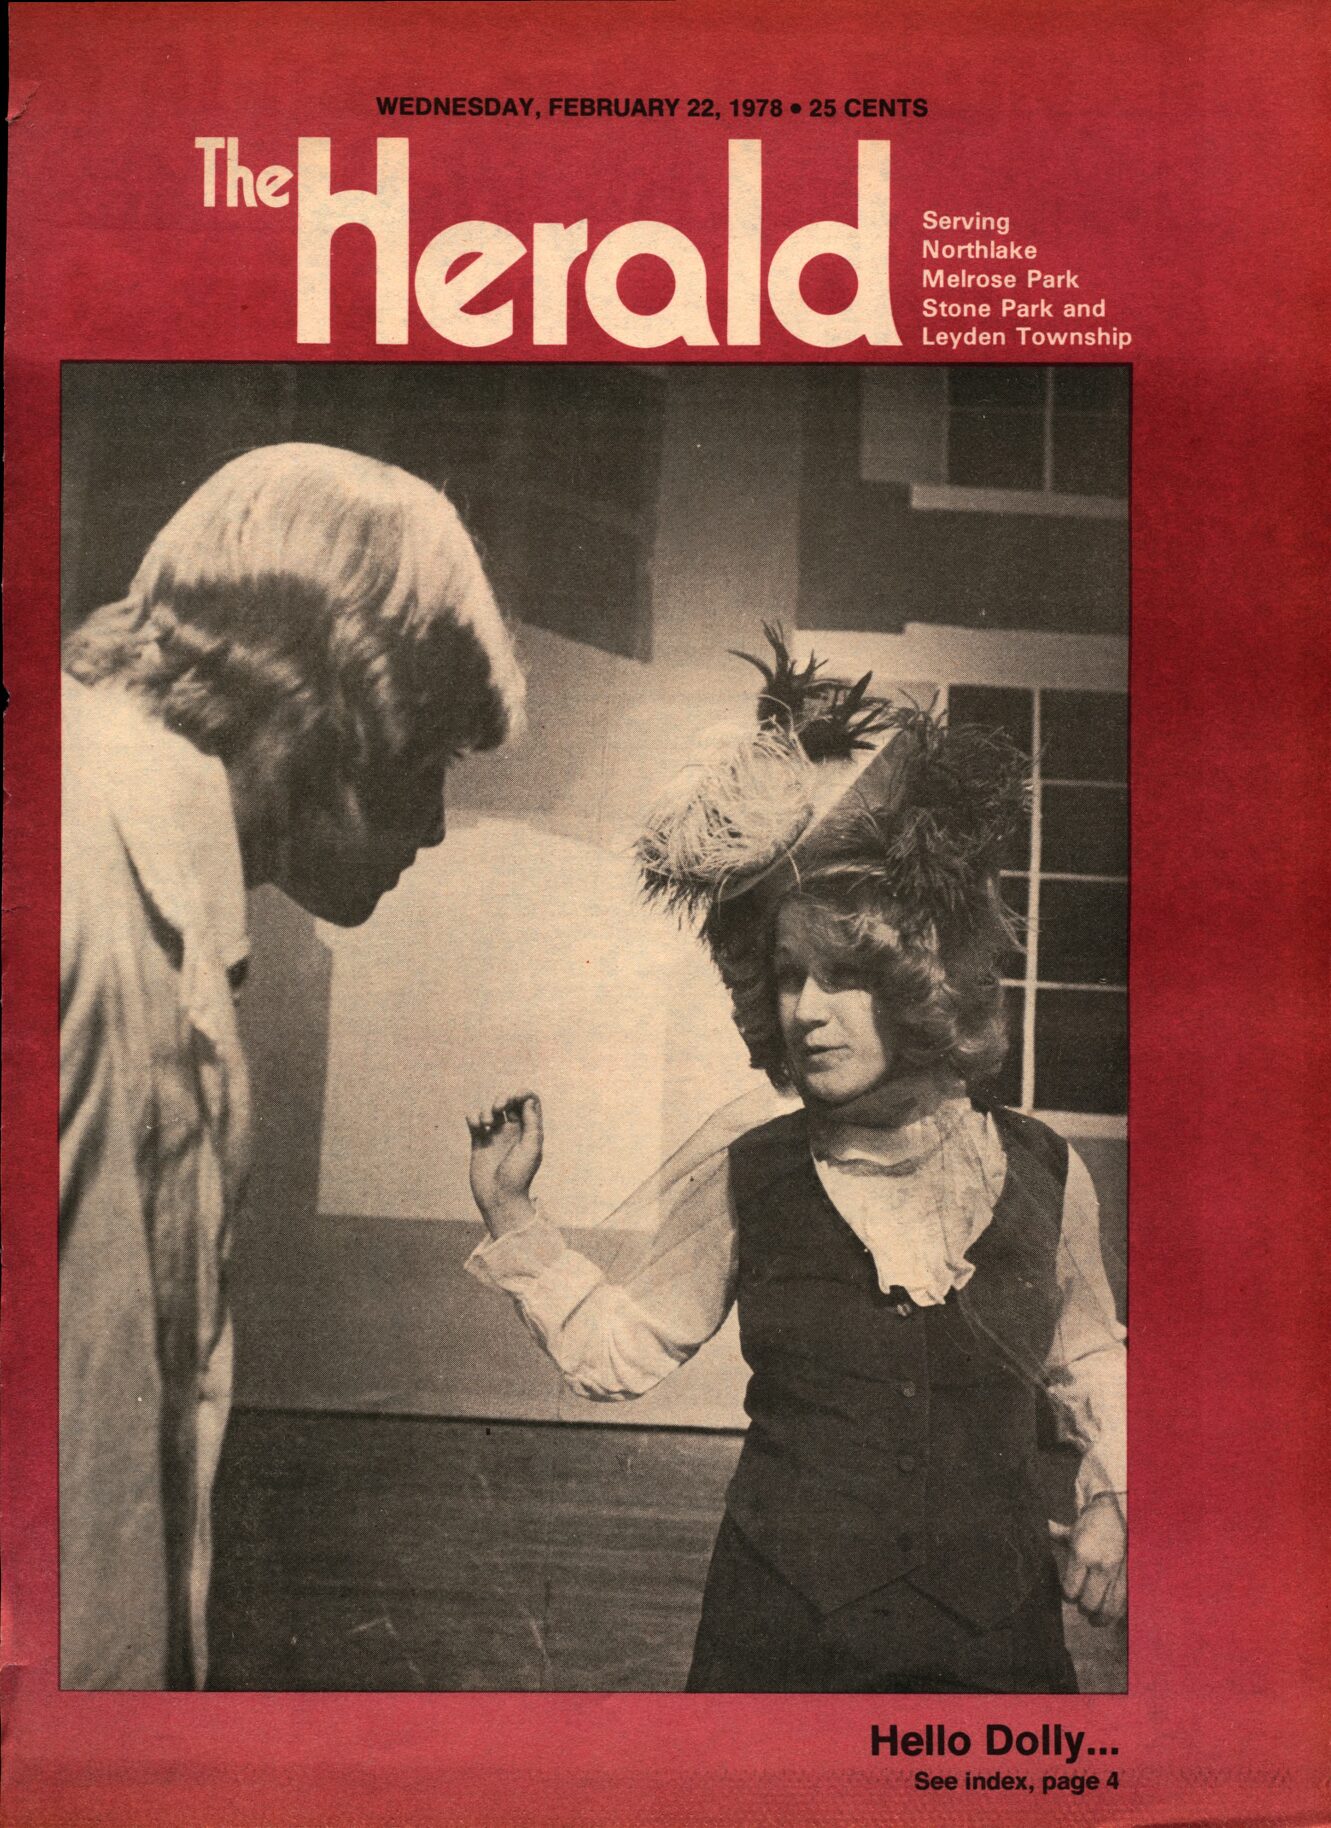 The Herald – 19780222